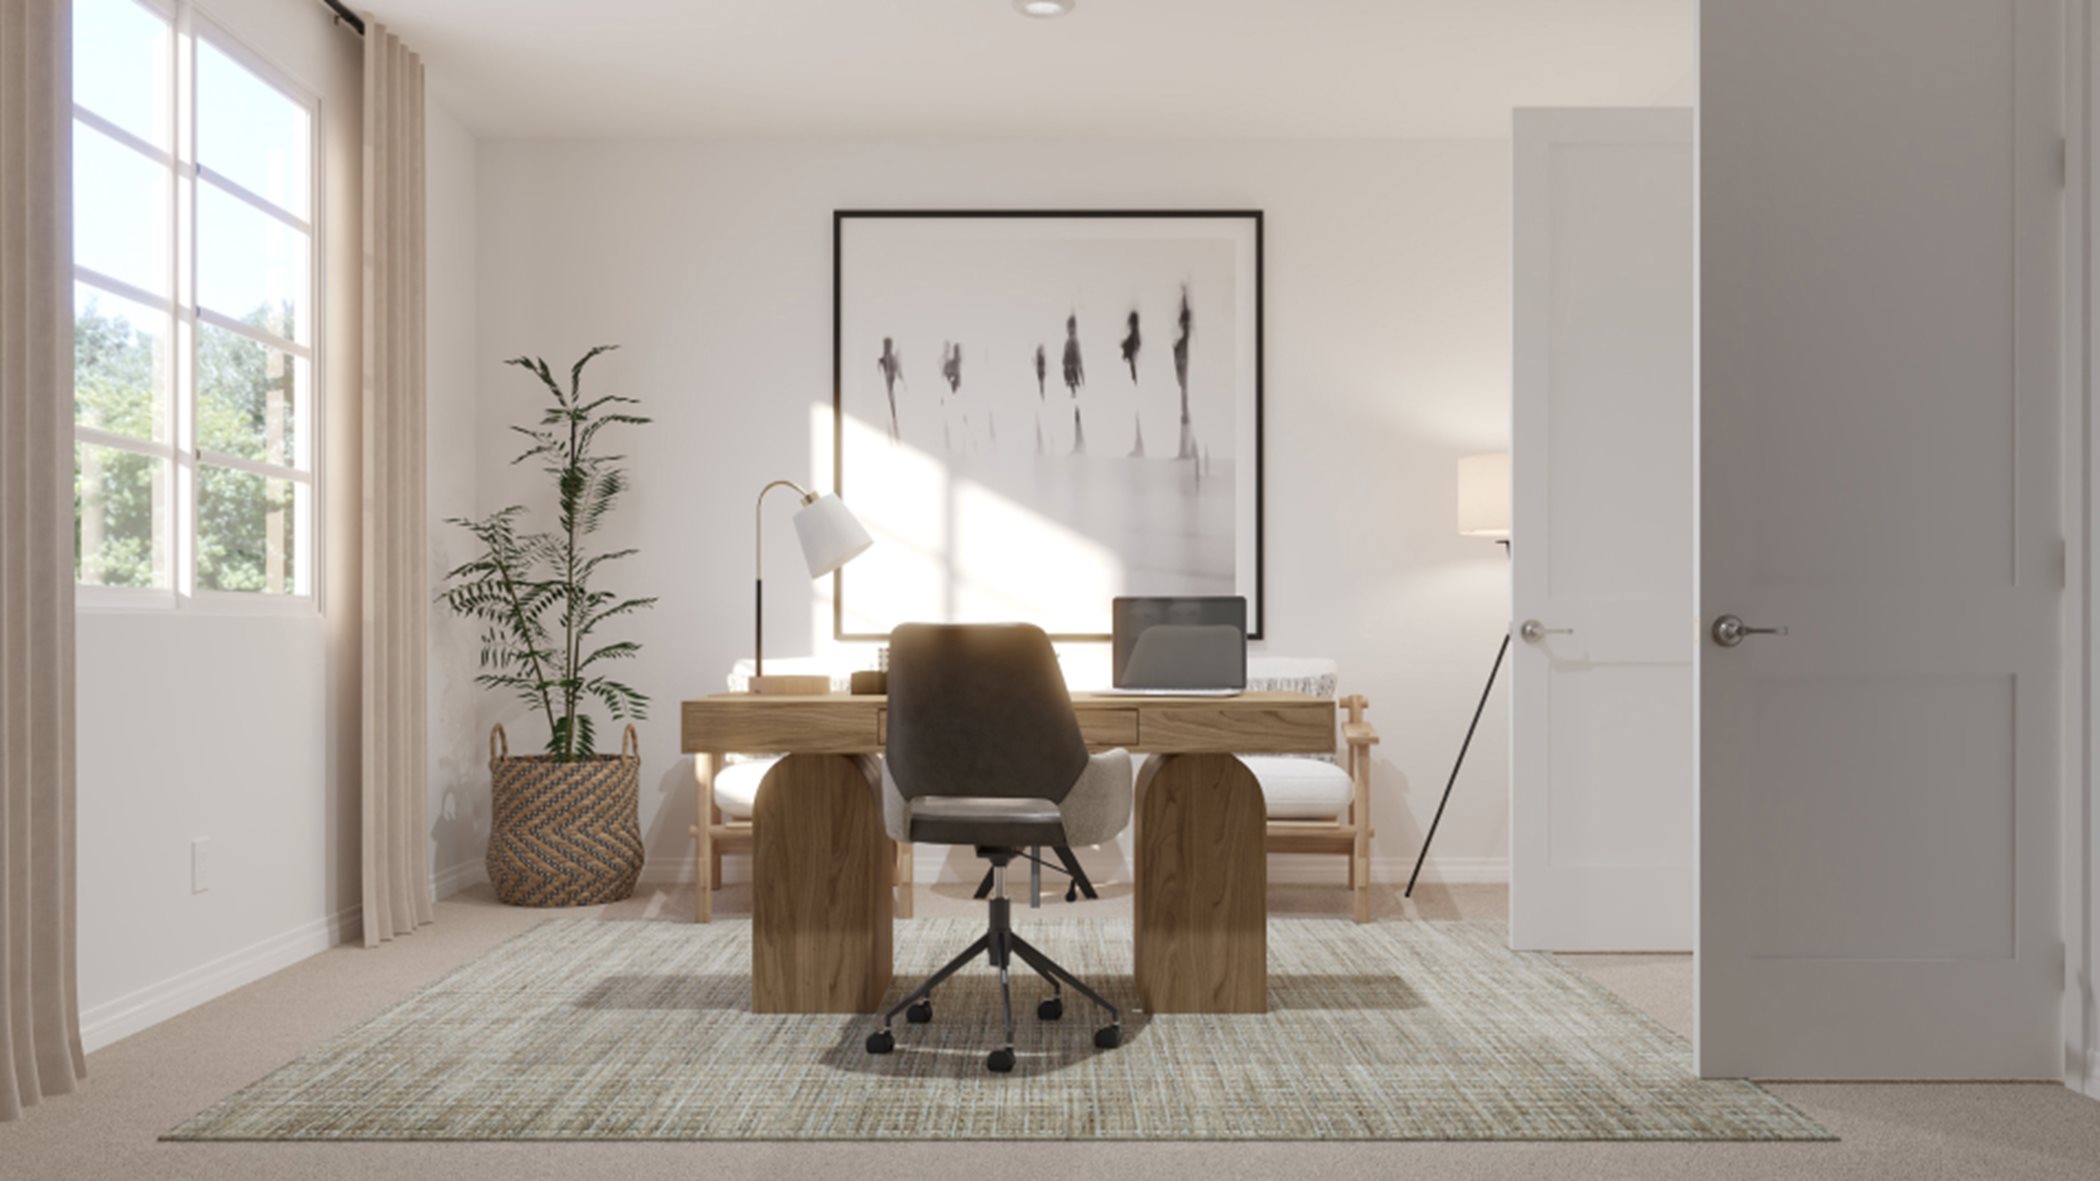 Flex room styled as an office